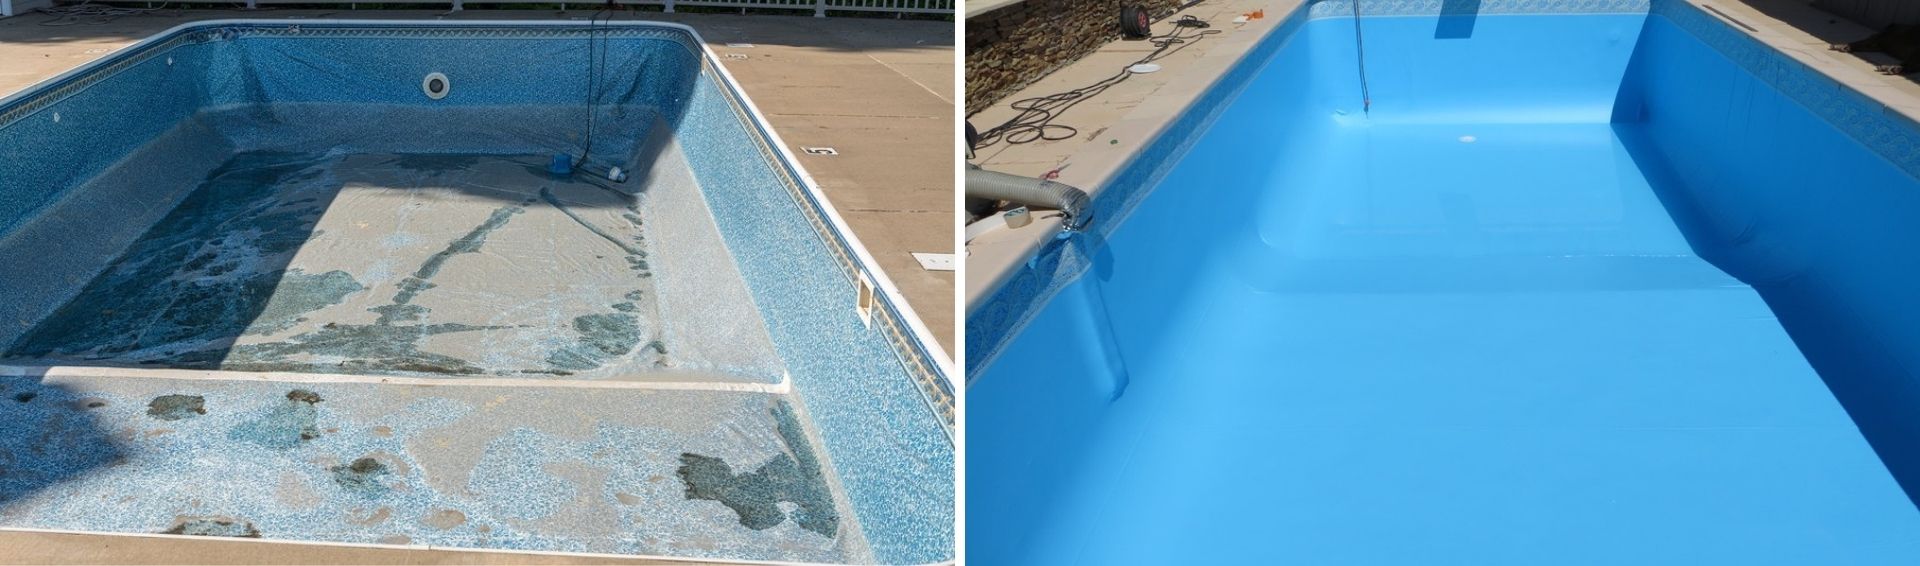 renovation liner piscine